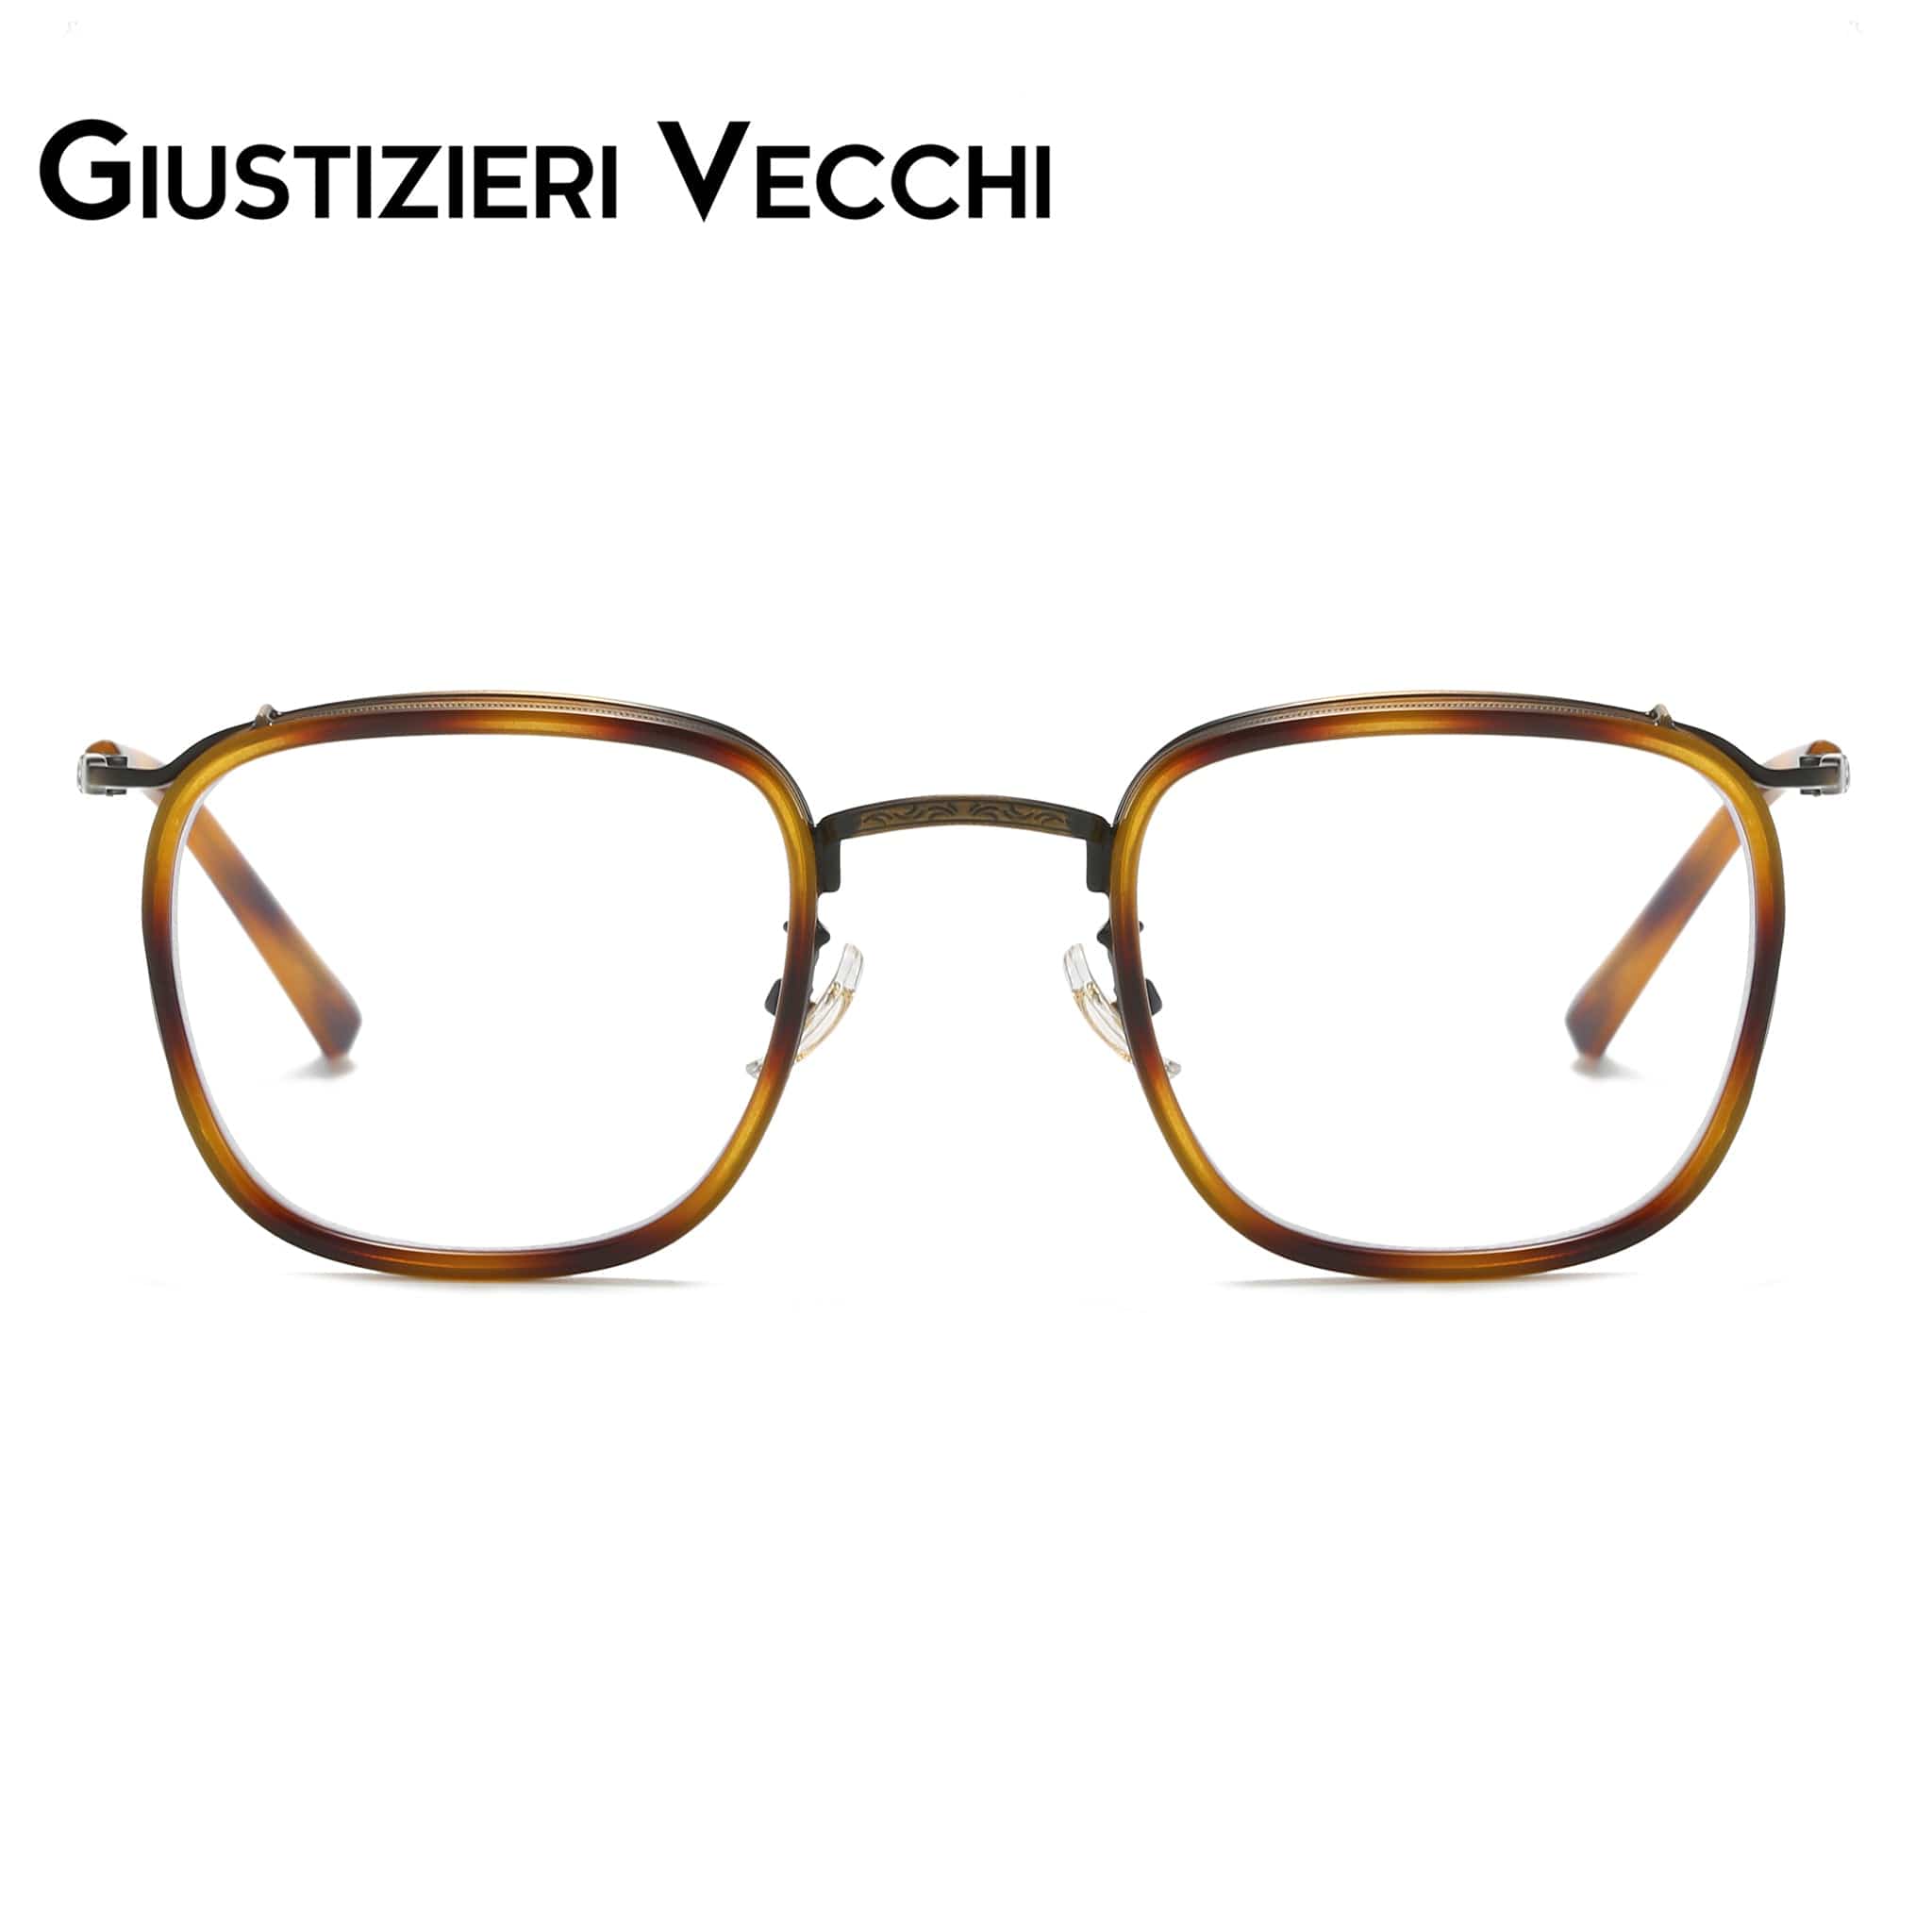 GIUSTIZIERI VECCHI Eyeglasses Small / Brown Tortoise Starry Night Duo